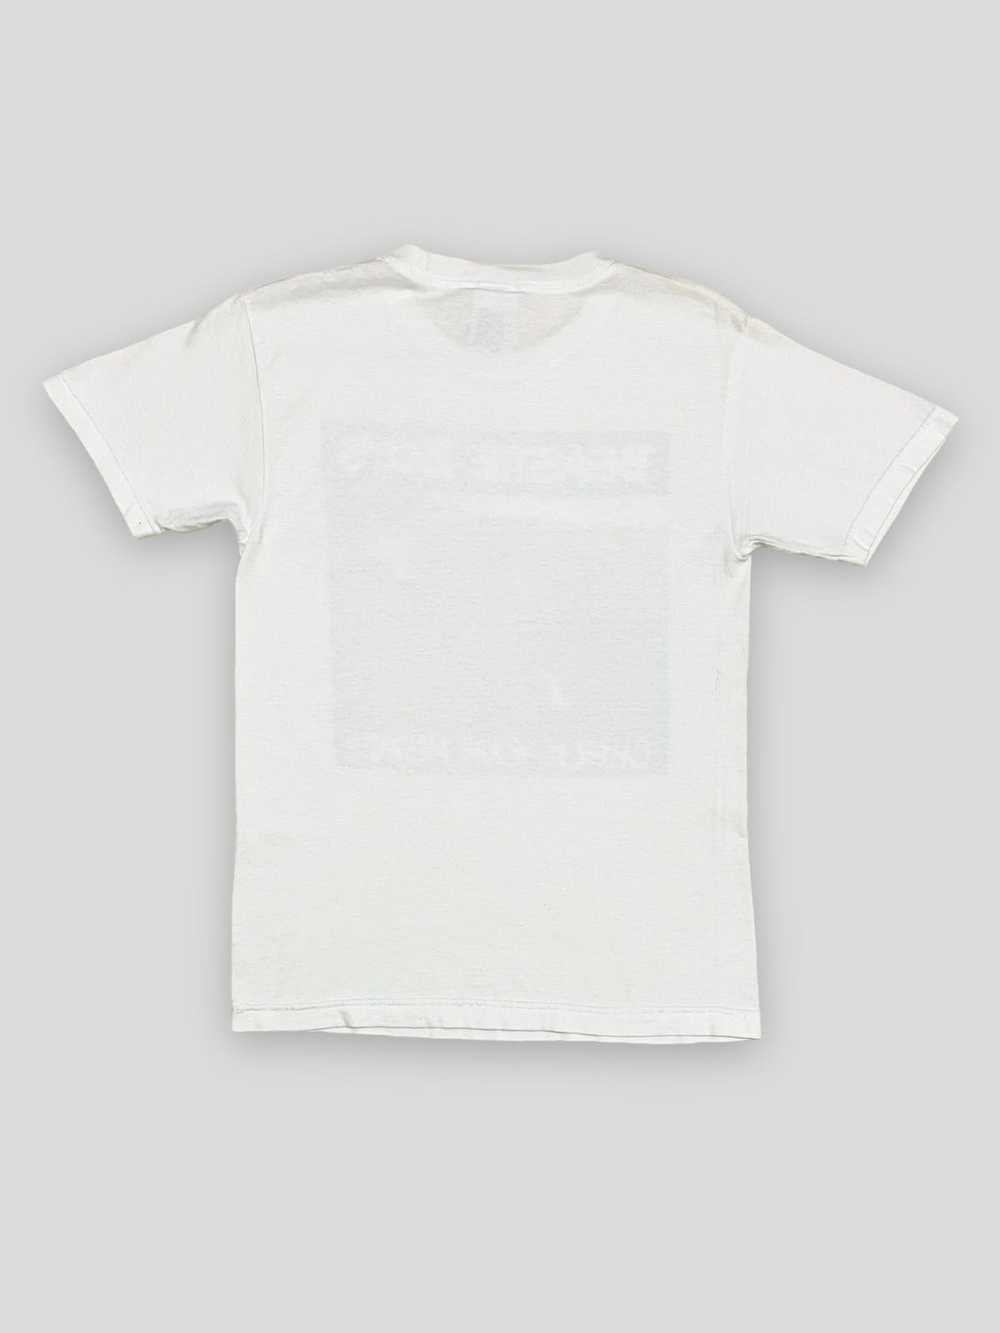 Band Tees × Rock T Shirt × Vintage VINTAGE BAND T… - image 5